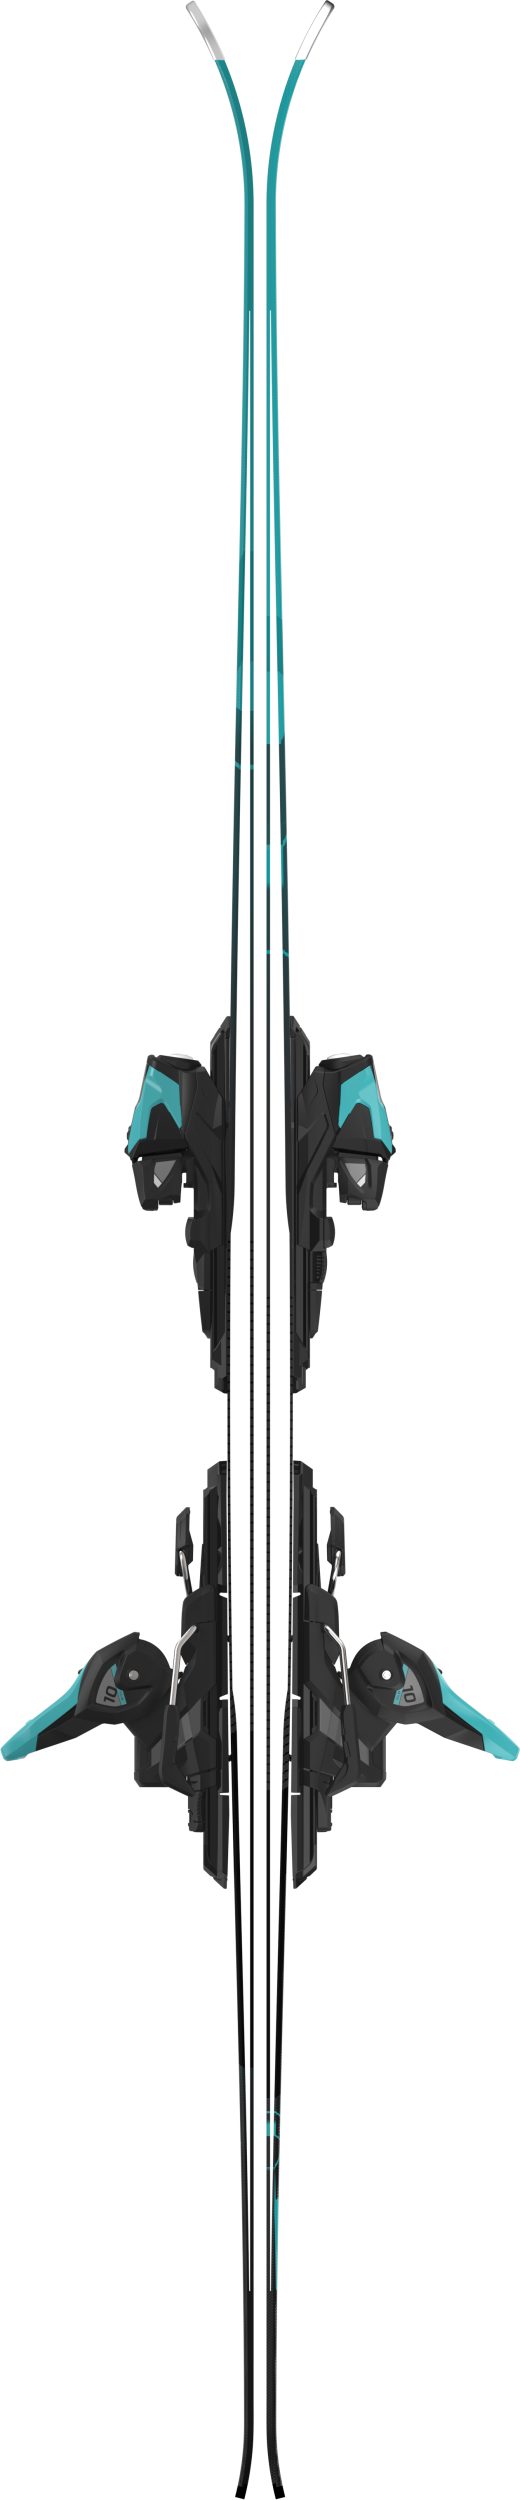 GW M BLUE TEAL BLUE 10 + REDSTER Atomic Ski X5 TEAL